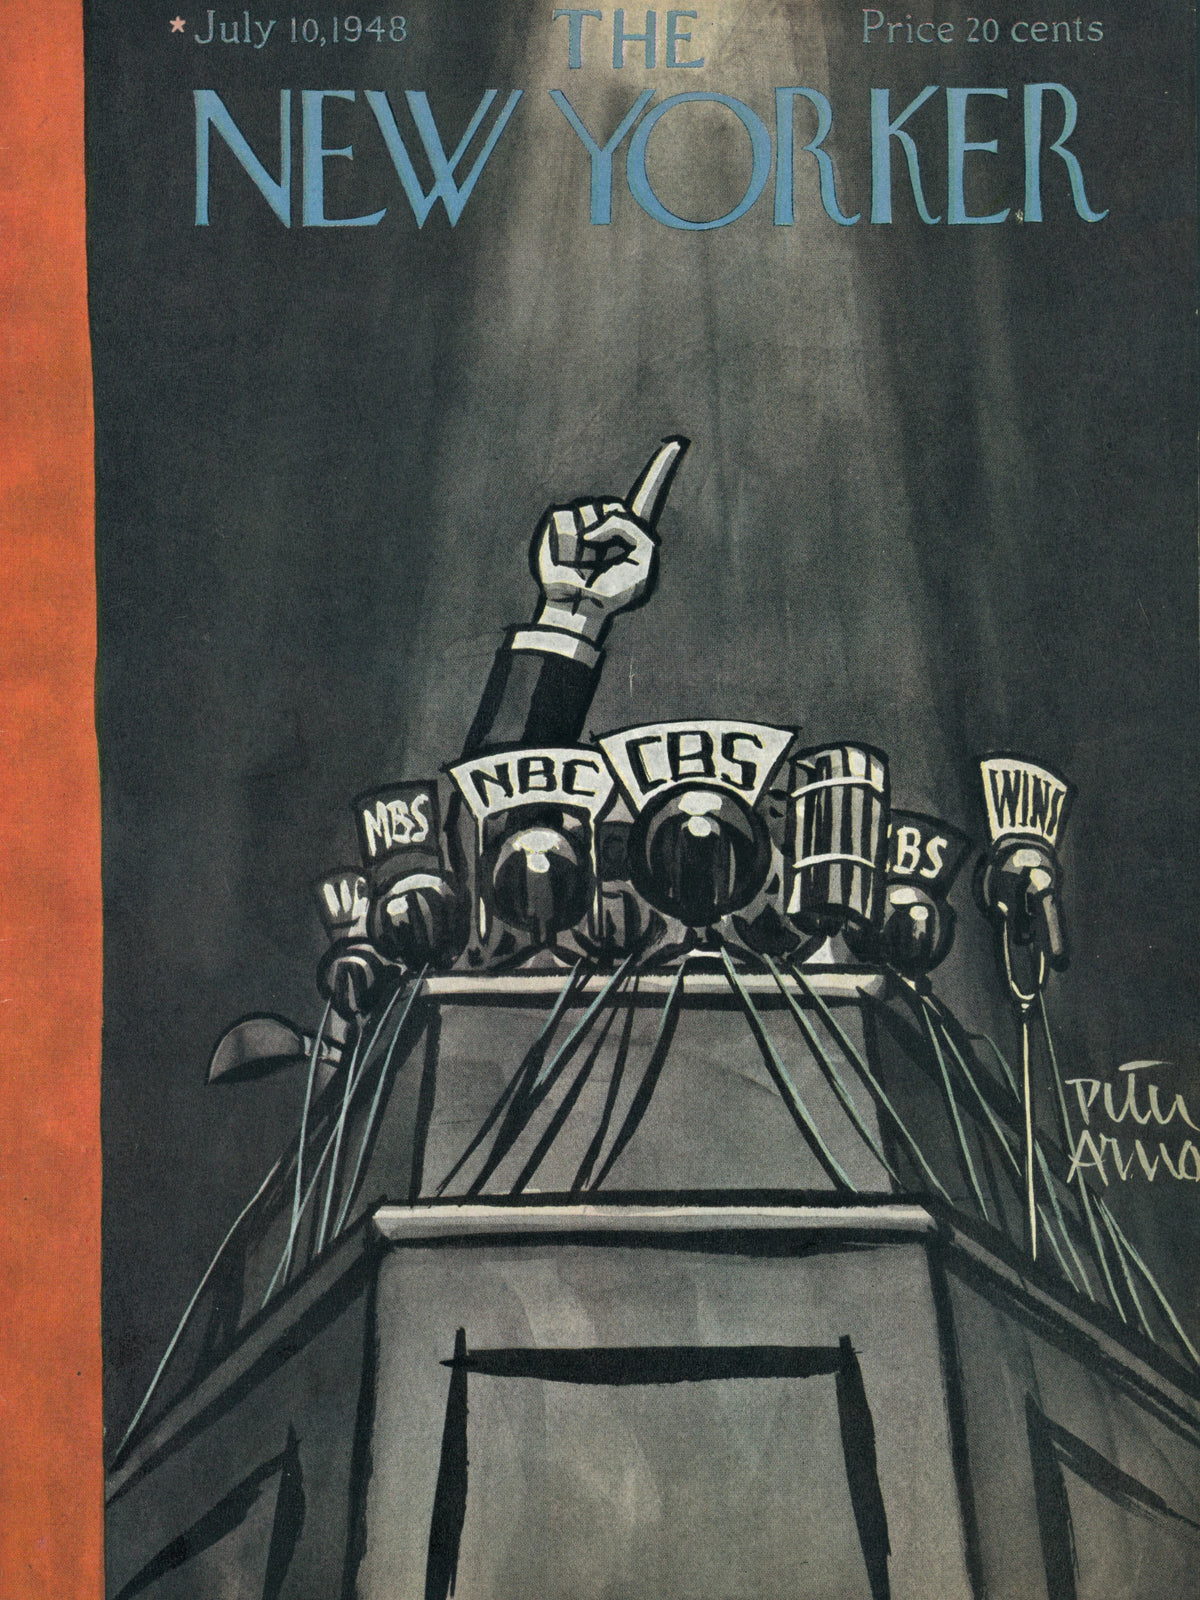 New Yorker Magazine Cover_13 - Authentic Vintage Antique Print